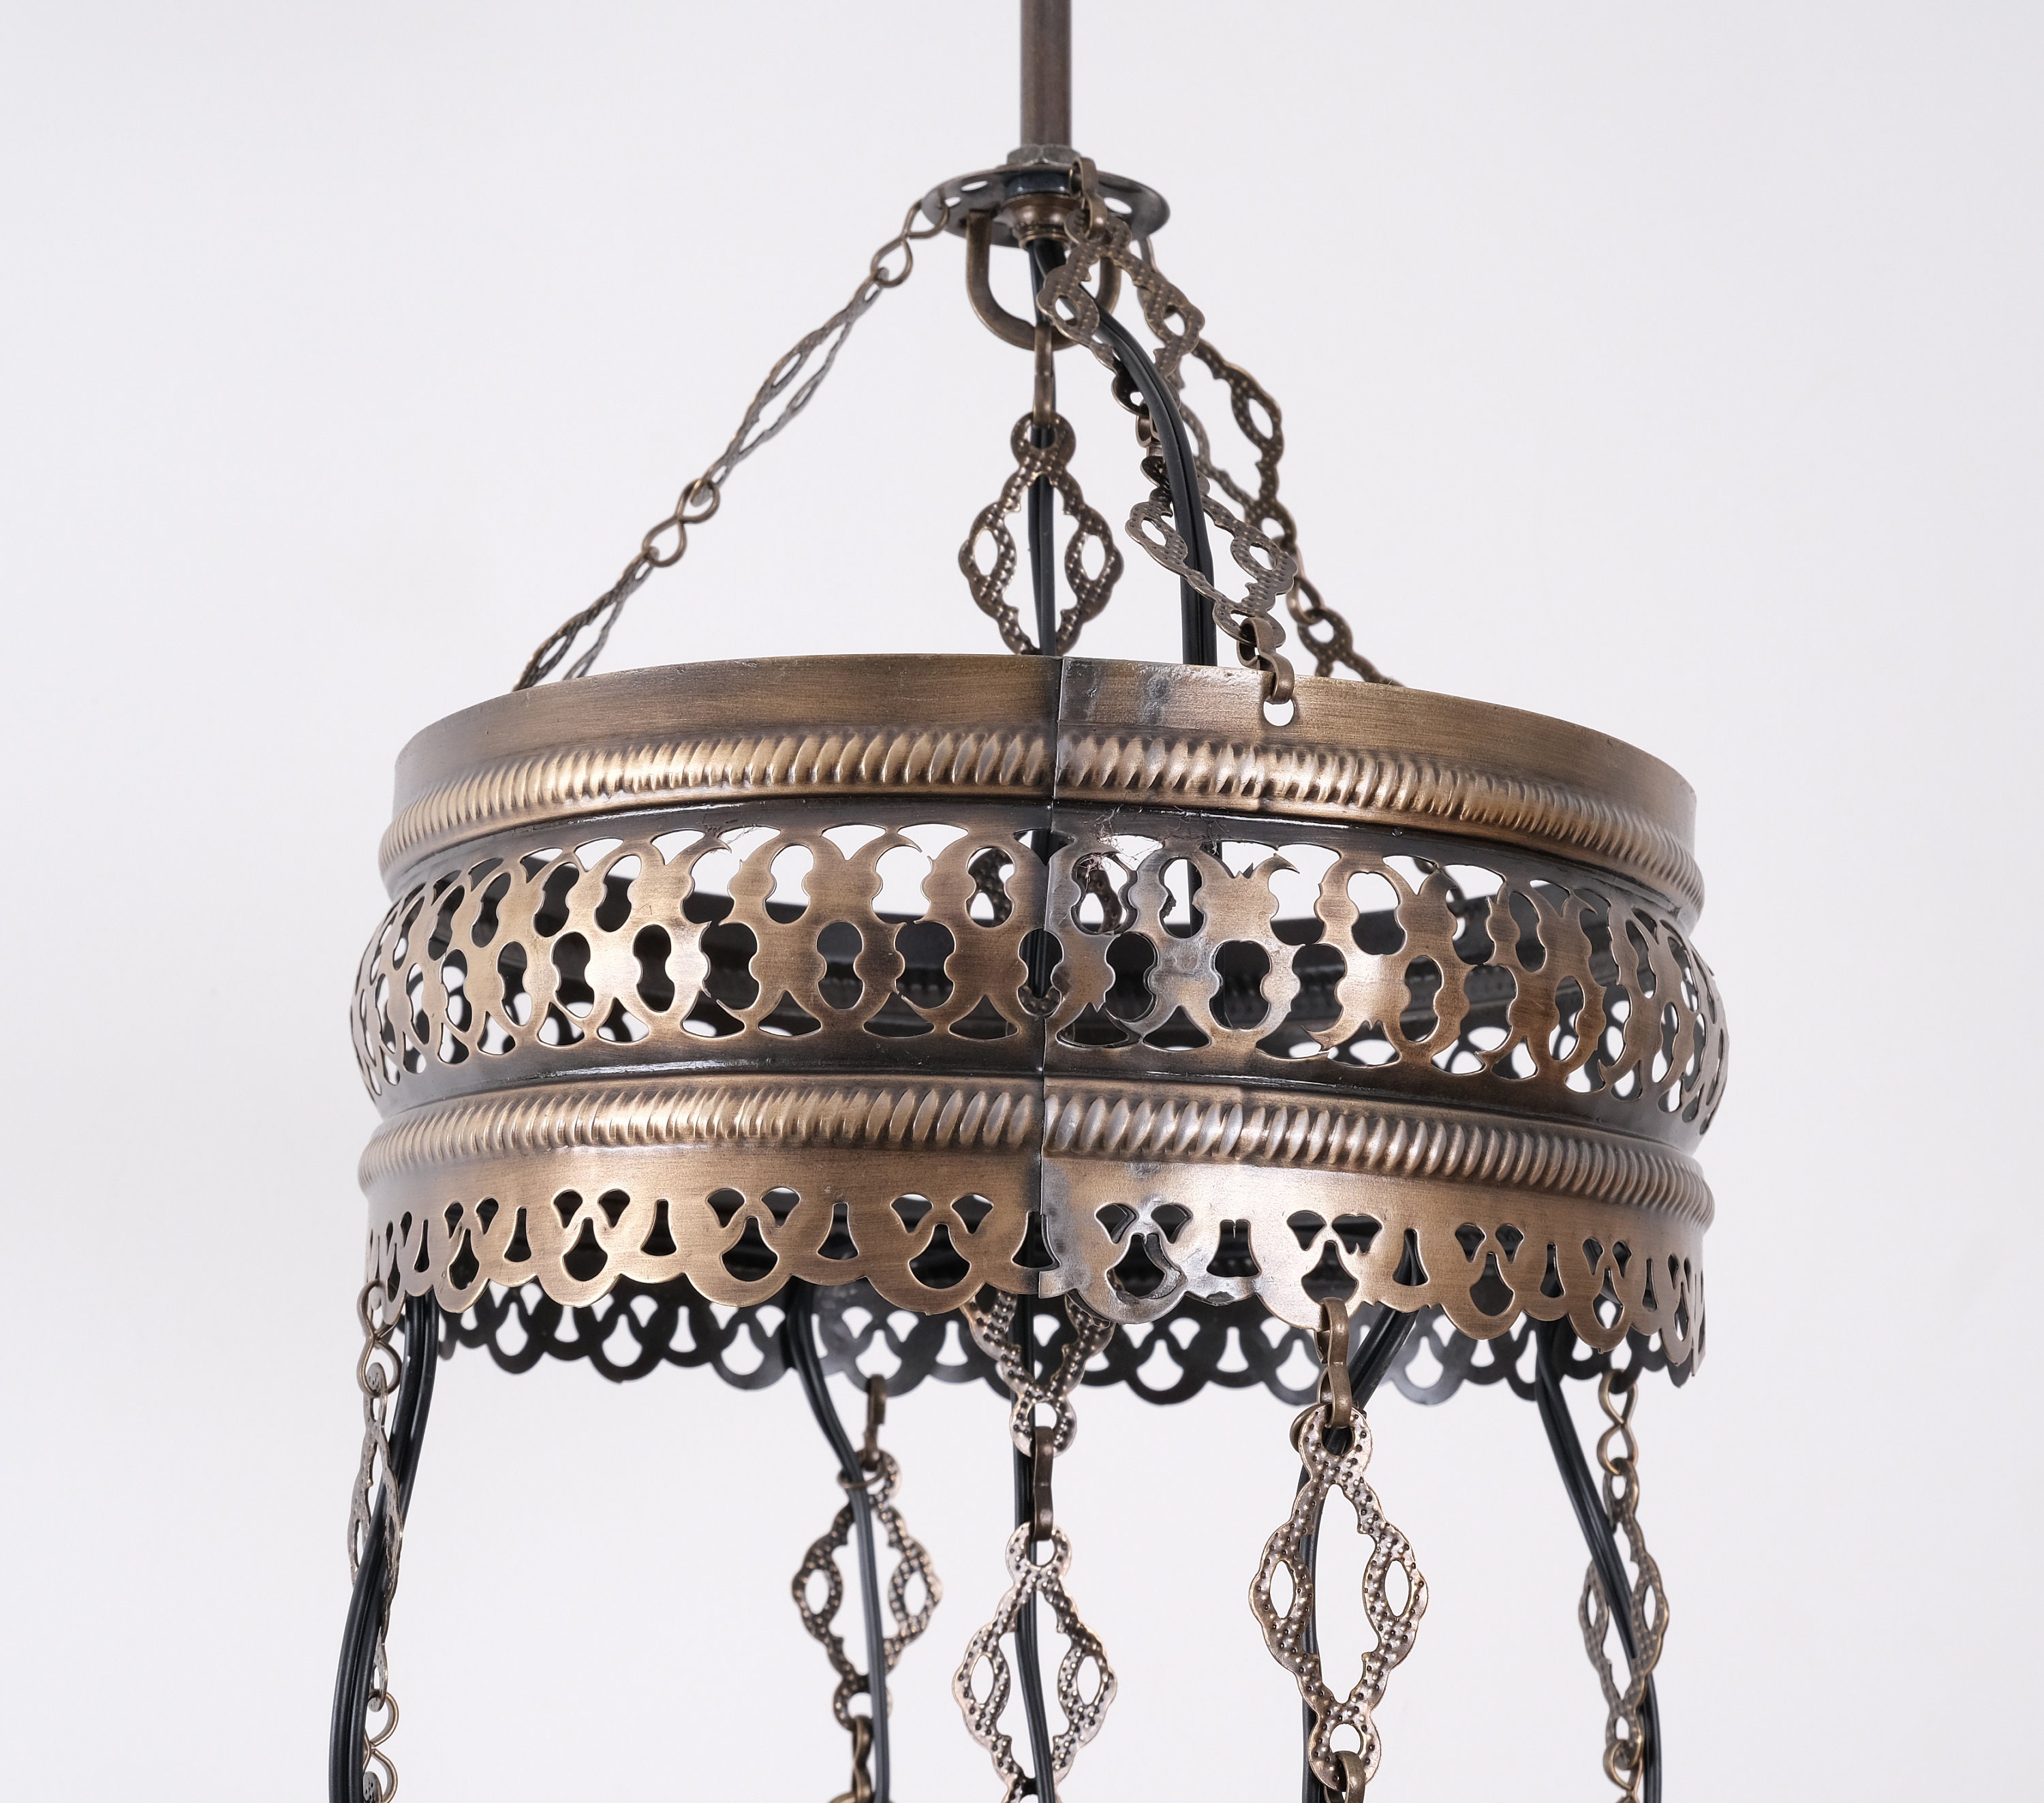 Lampada turca rossa, lampada a sospensione, lampadario a 5 globi, lampada  turca, lampada da soffitto turca, lampada a sospensione, Asylove New Design  -  Italia